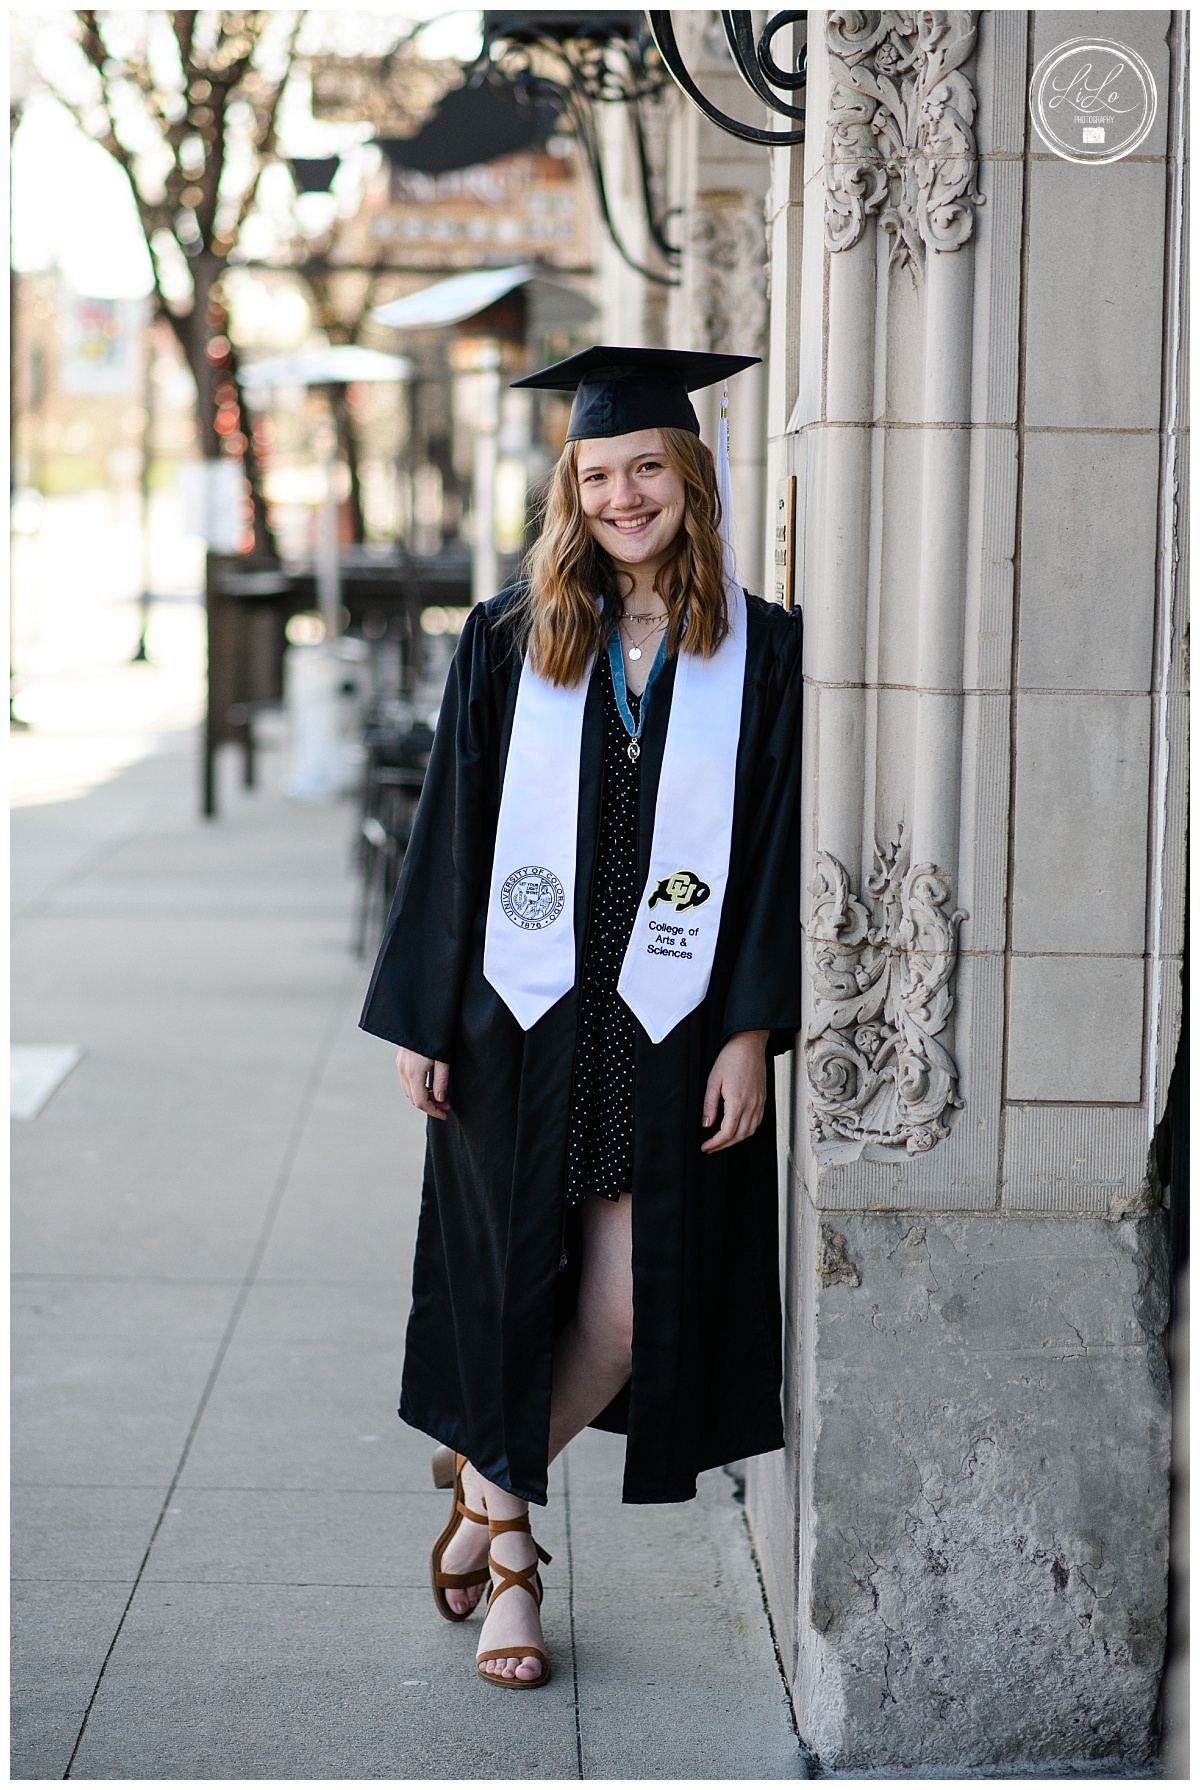 College Graduation Pictures